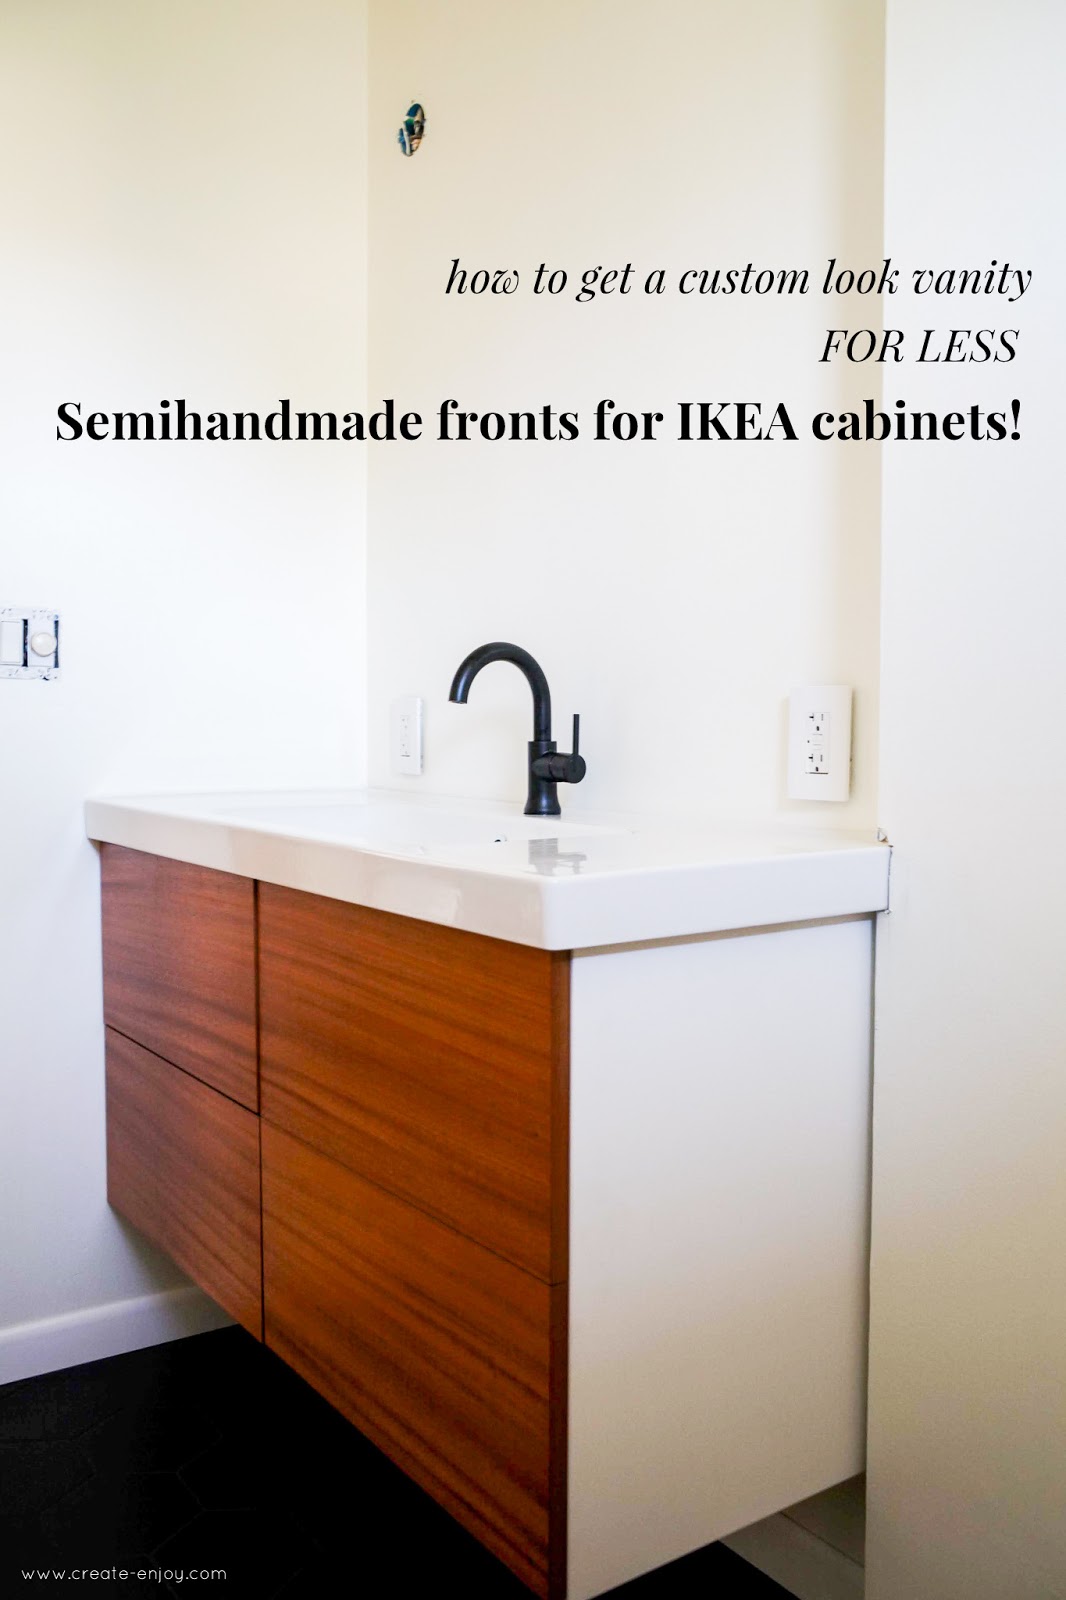 custom-look vanity for less with semihandmade doors for ikea